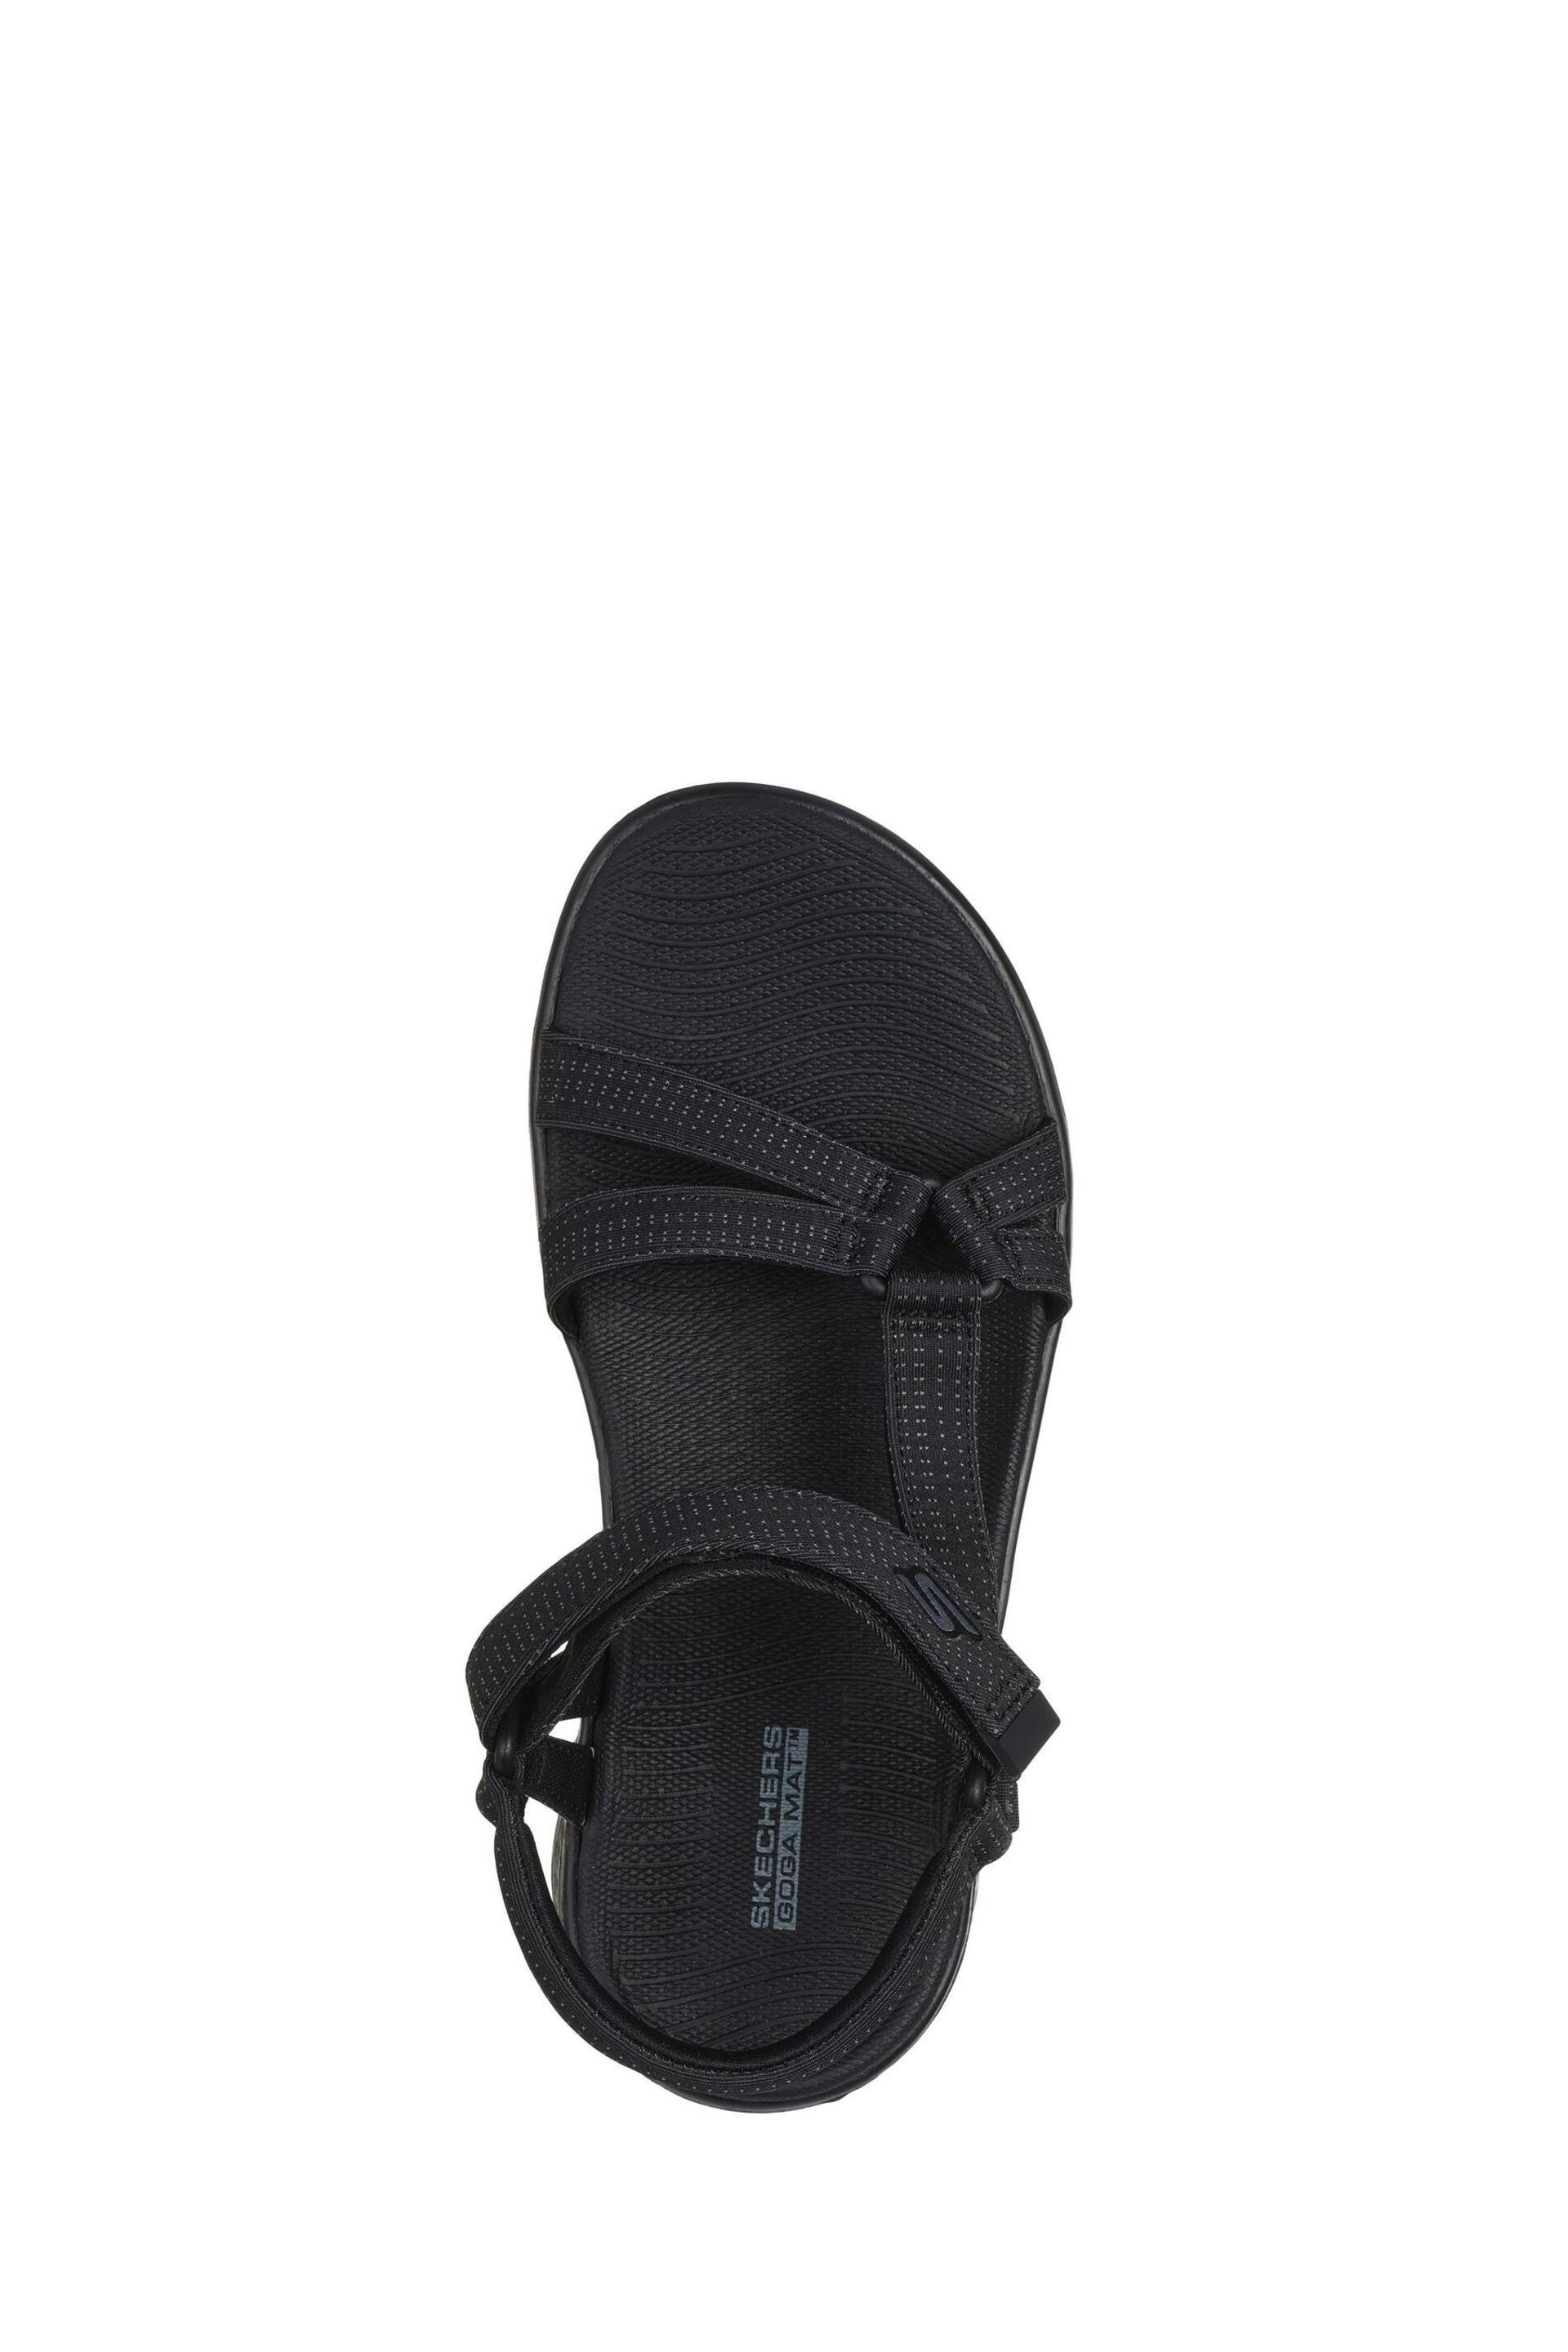 Skechers Black Go Walk Flex Sublime-X Sandals - Image 4 of 5